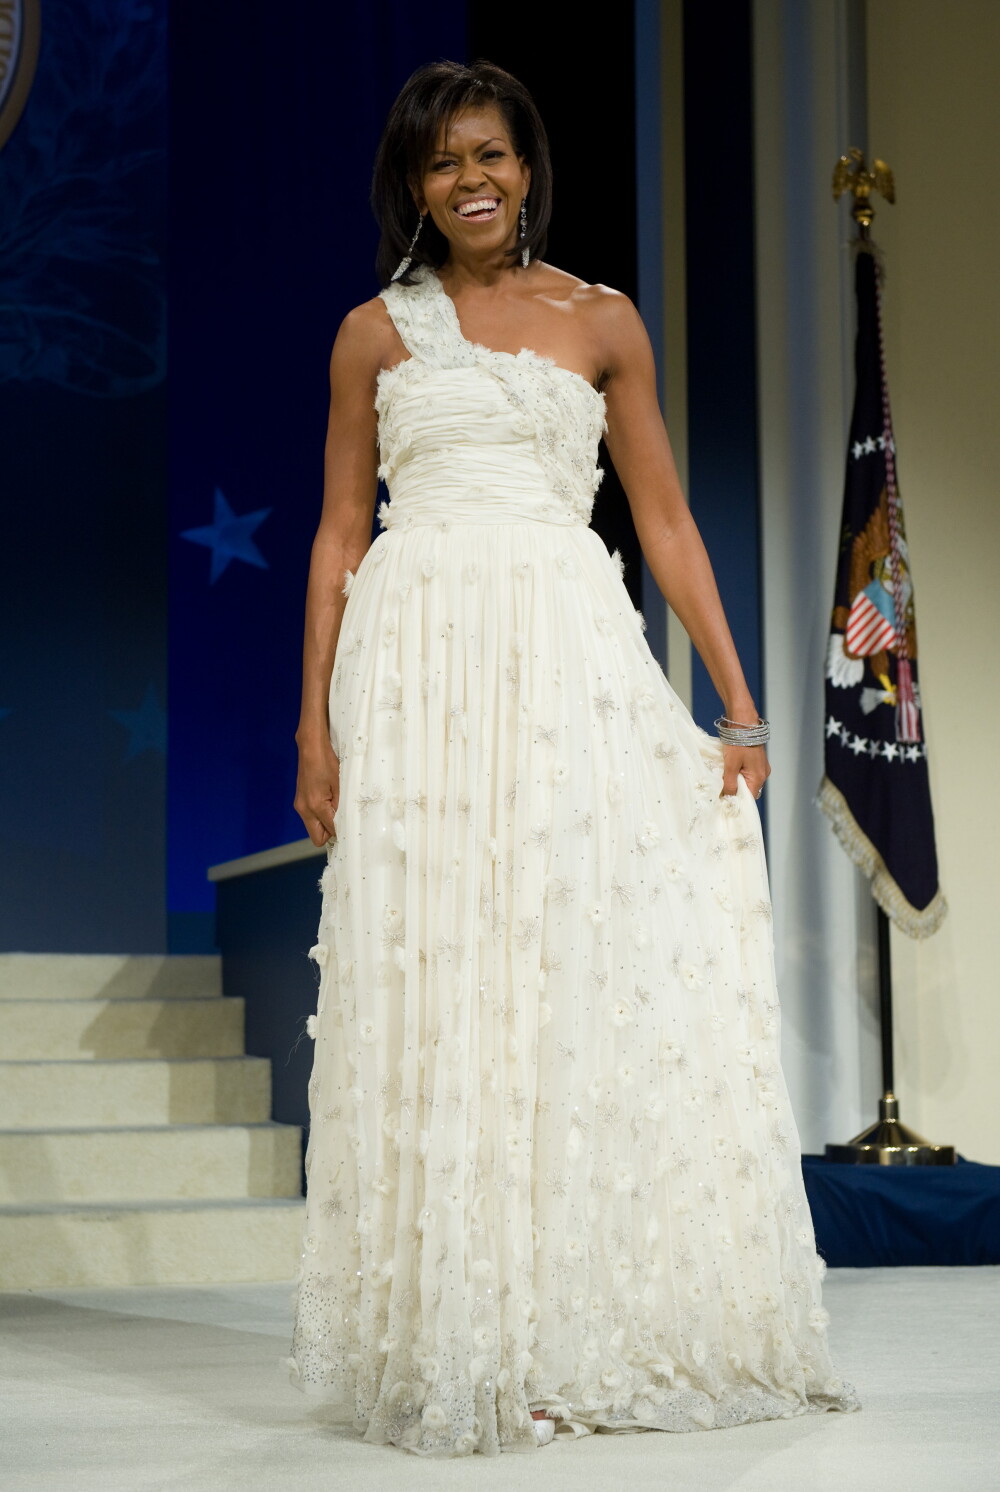 Designerii nu au stiut ca doamna Obama le va purta rochiile la investire! - Imaginea 2